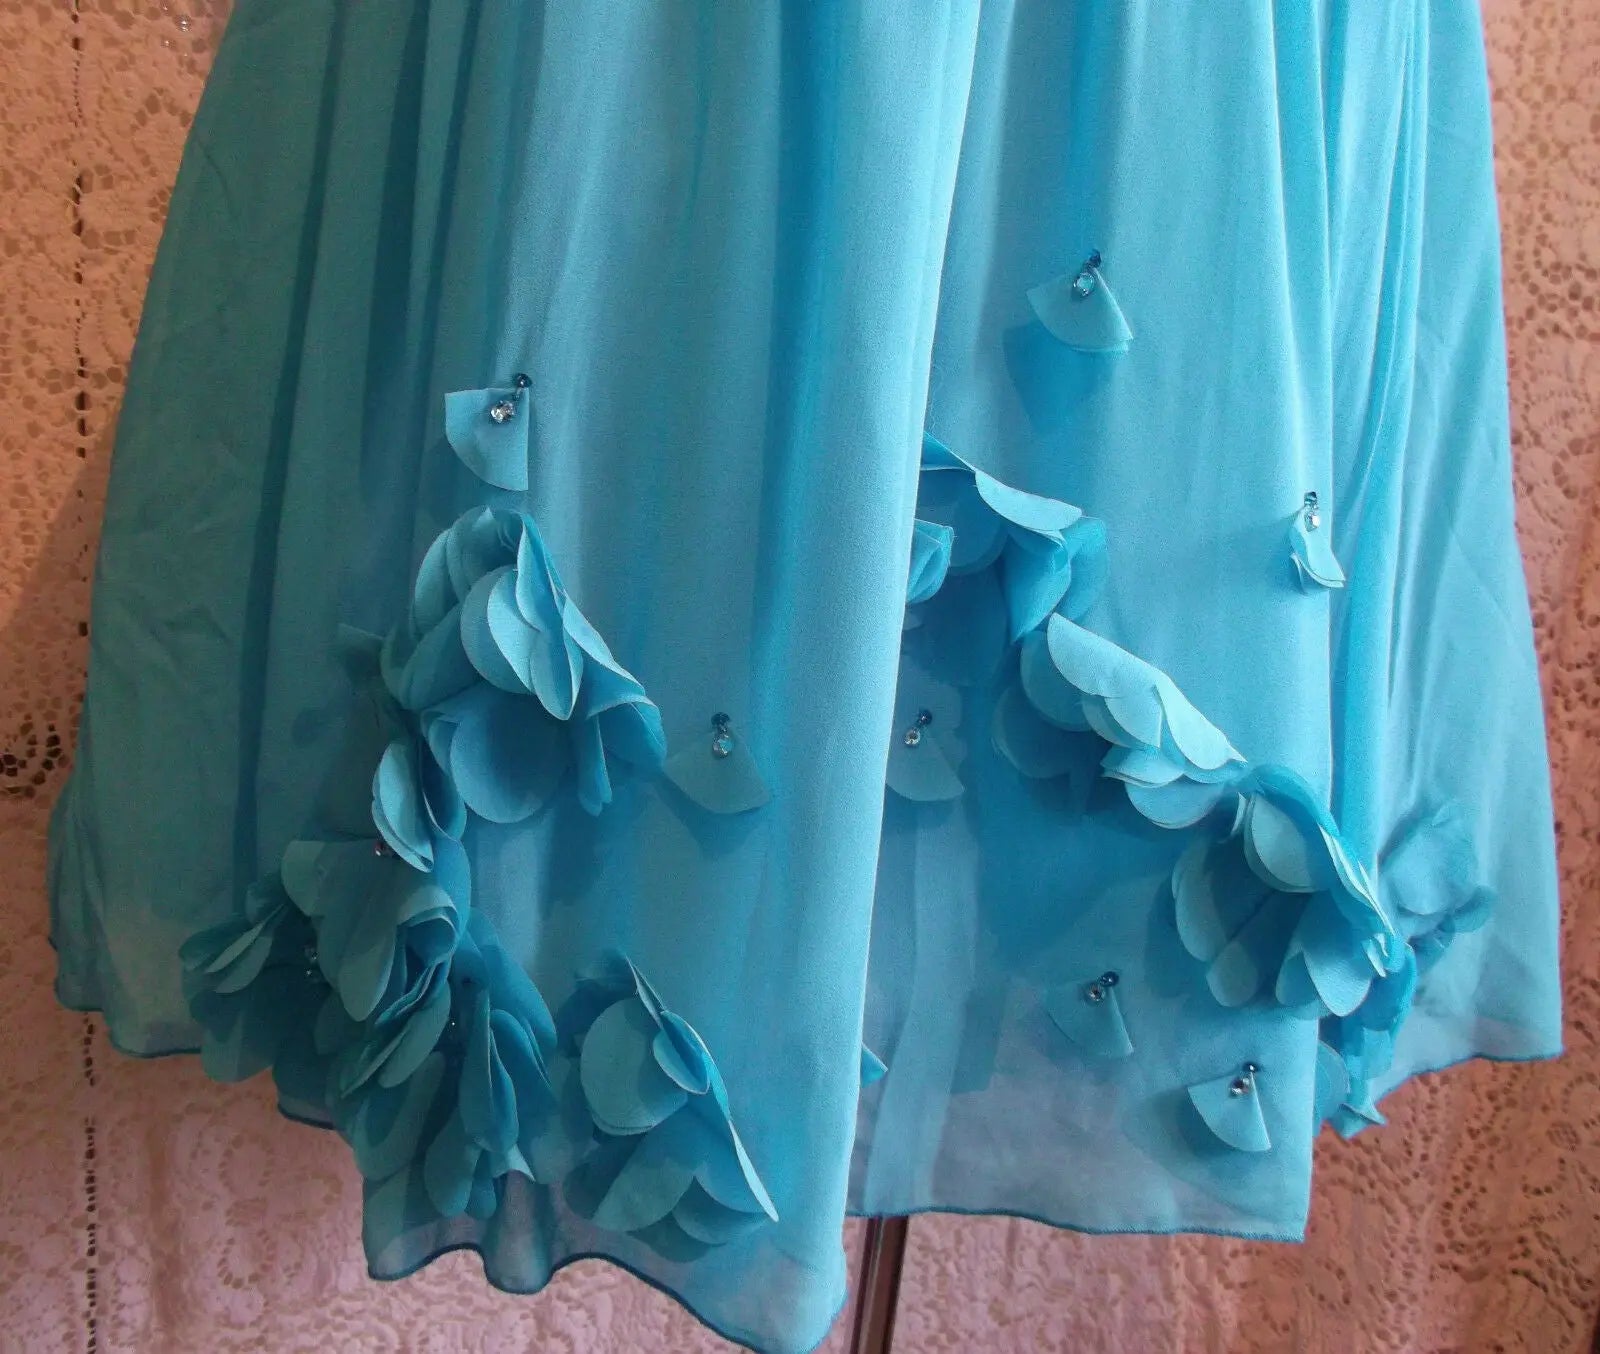 Gorgeous TURQUOISE COCKTAIL DRESS Dress size14 flouncynet undrskirtsknee length LITTLE MISTRESS